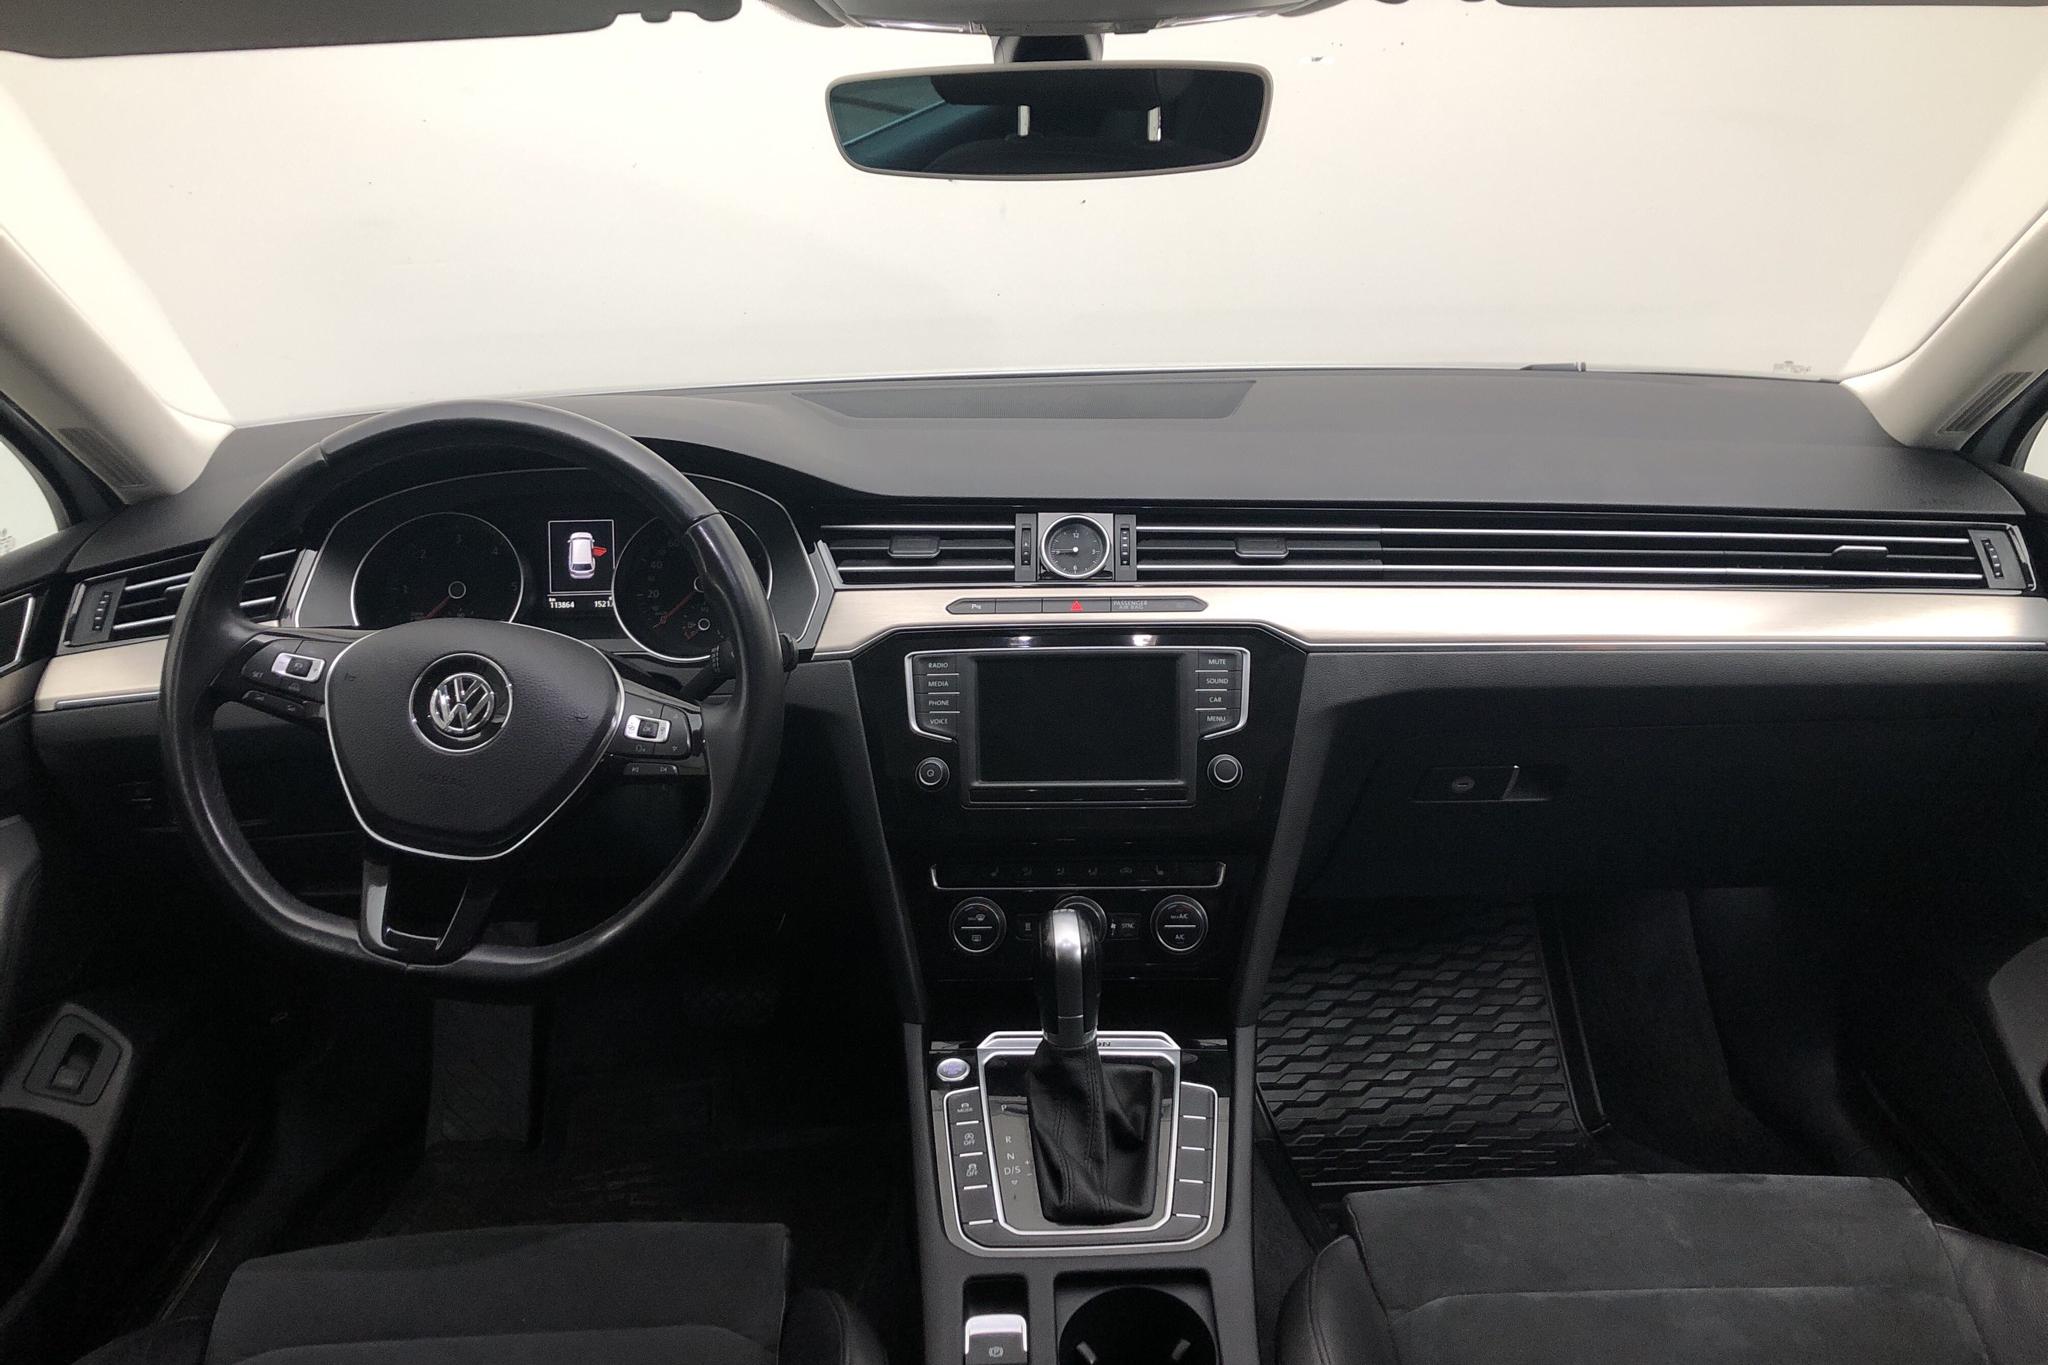 VW Passat 2.0 TDI BiTurbo Sportscombi 4MOTION (240hk) - 113 890 km - Automatic - white - 2016